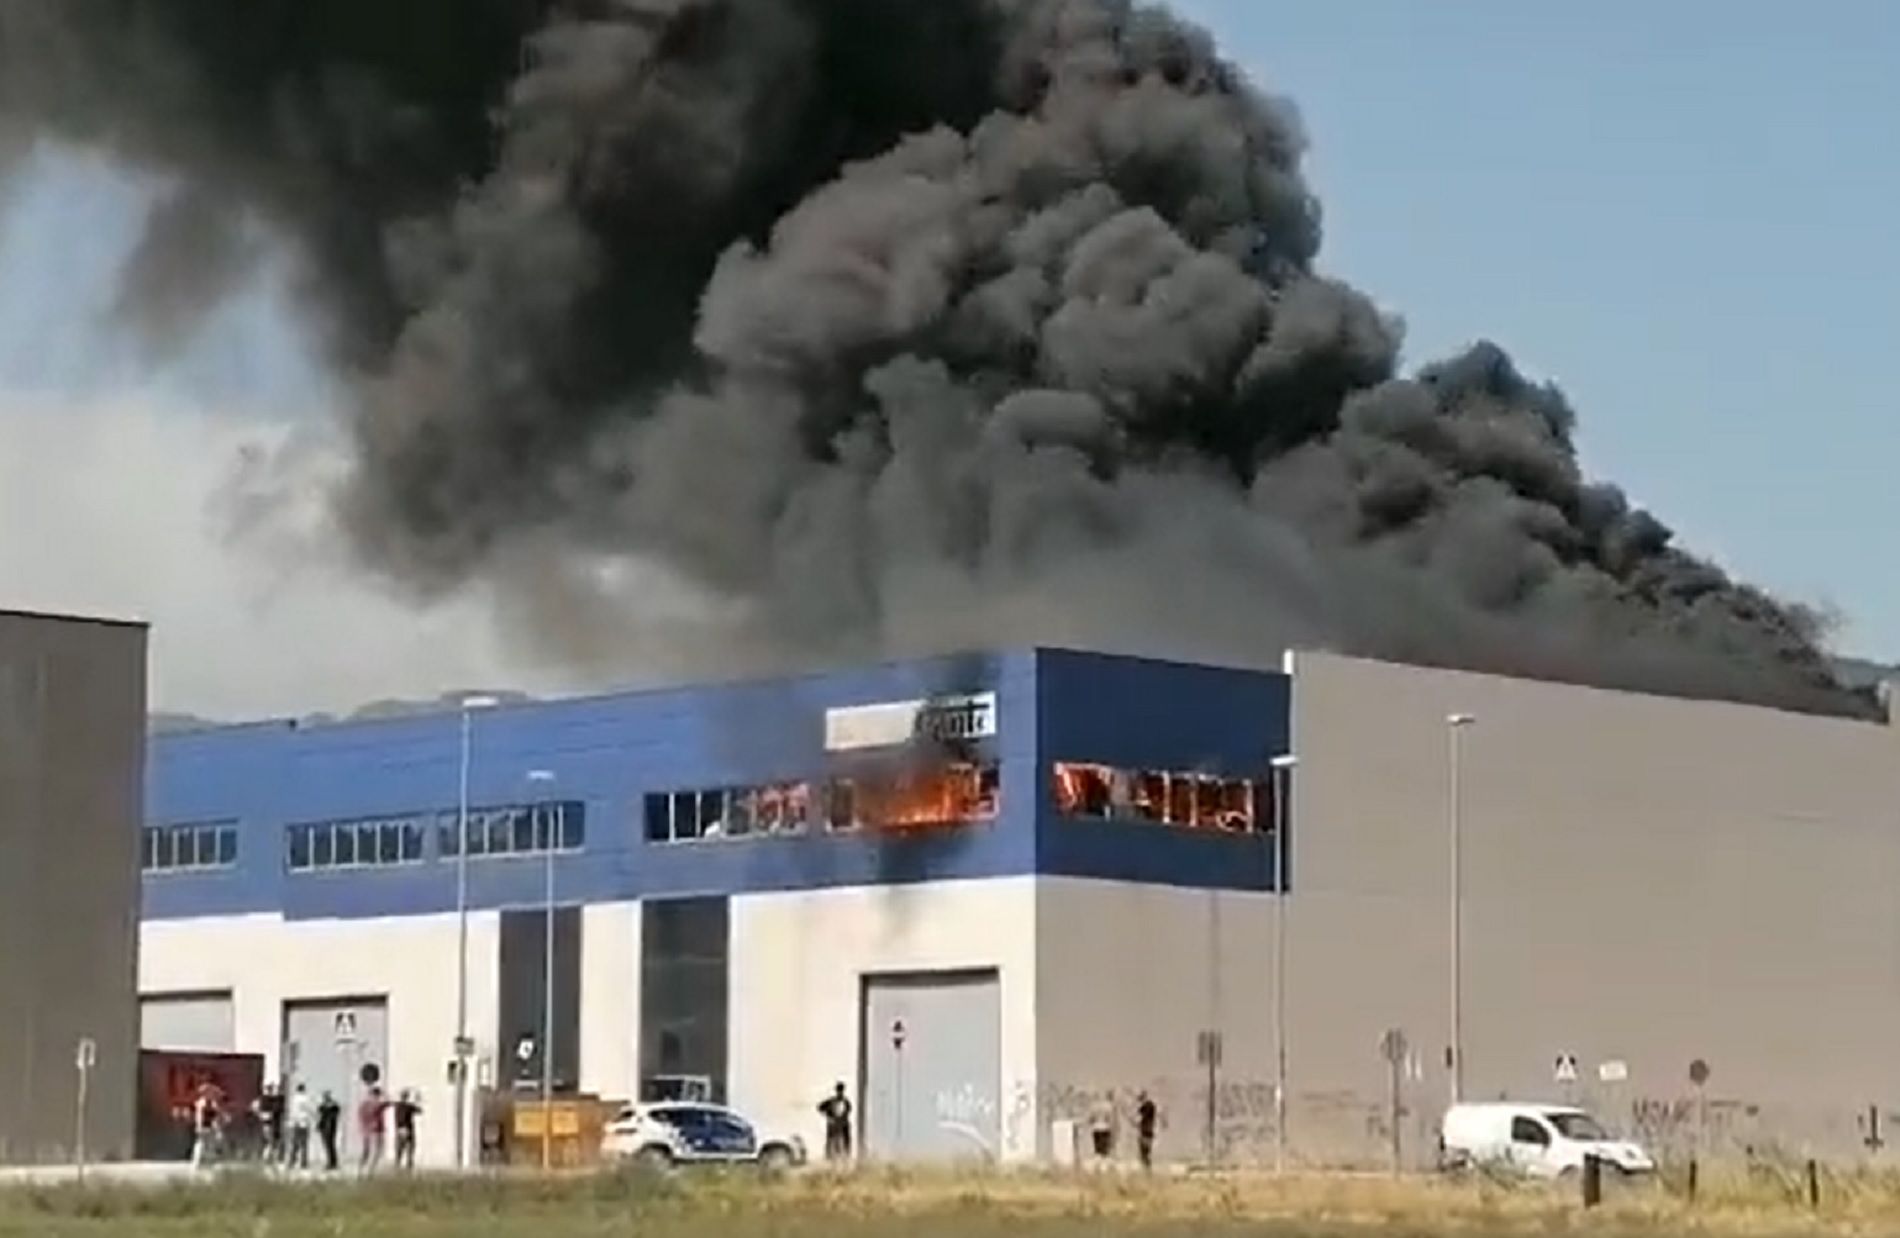 Incendio La Garriga / Bombers La Garriga